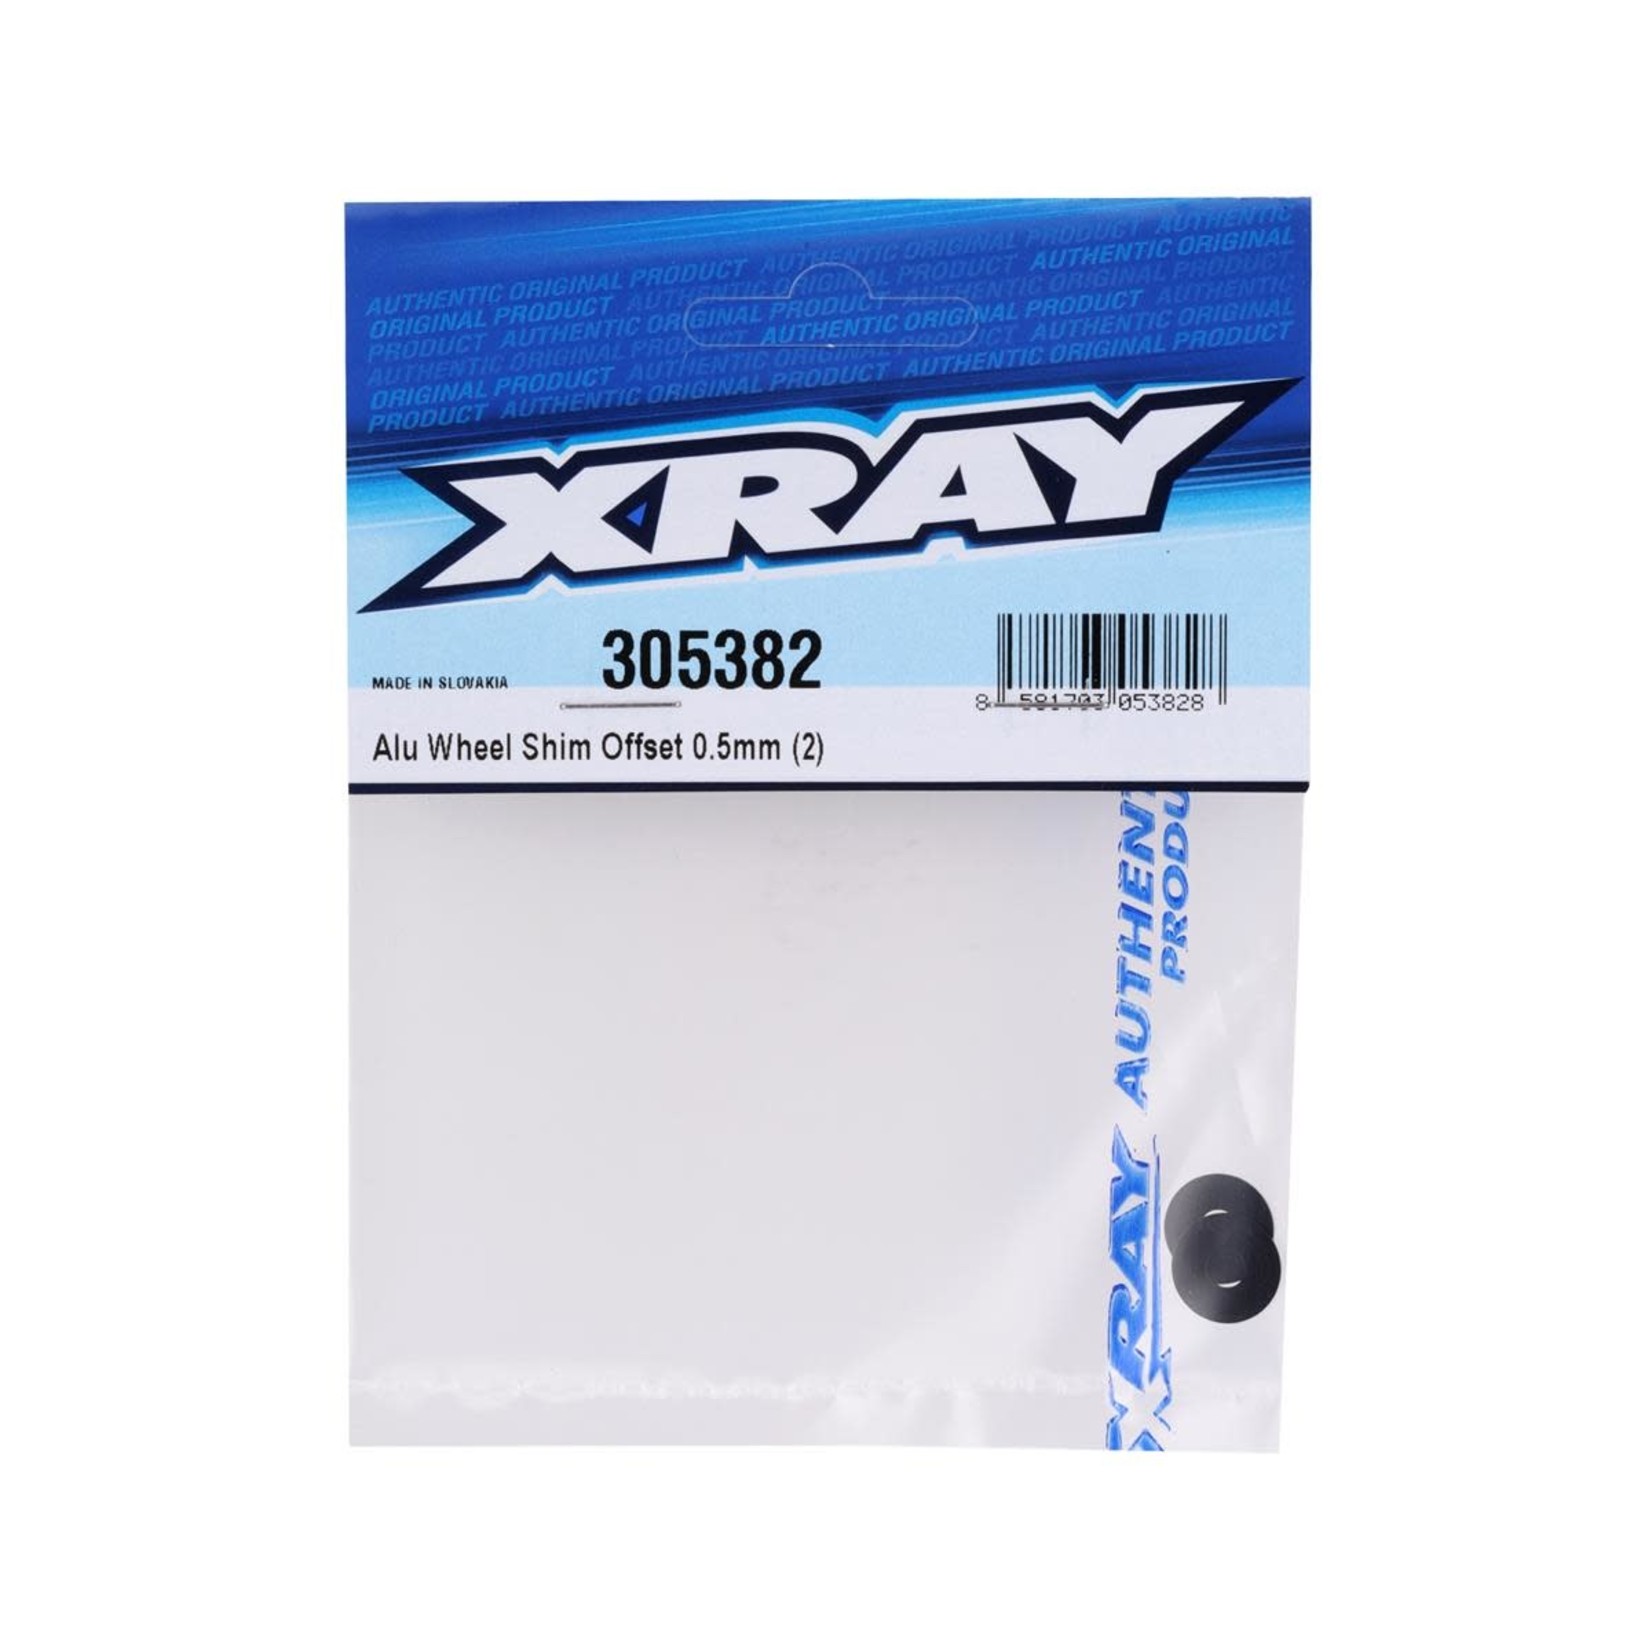 XRAY XRAY 0.5mm Aluminum Offset Wheel Shim (2) #305382